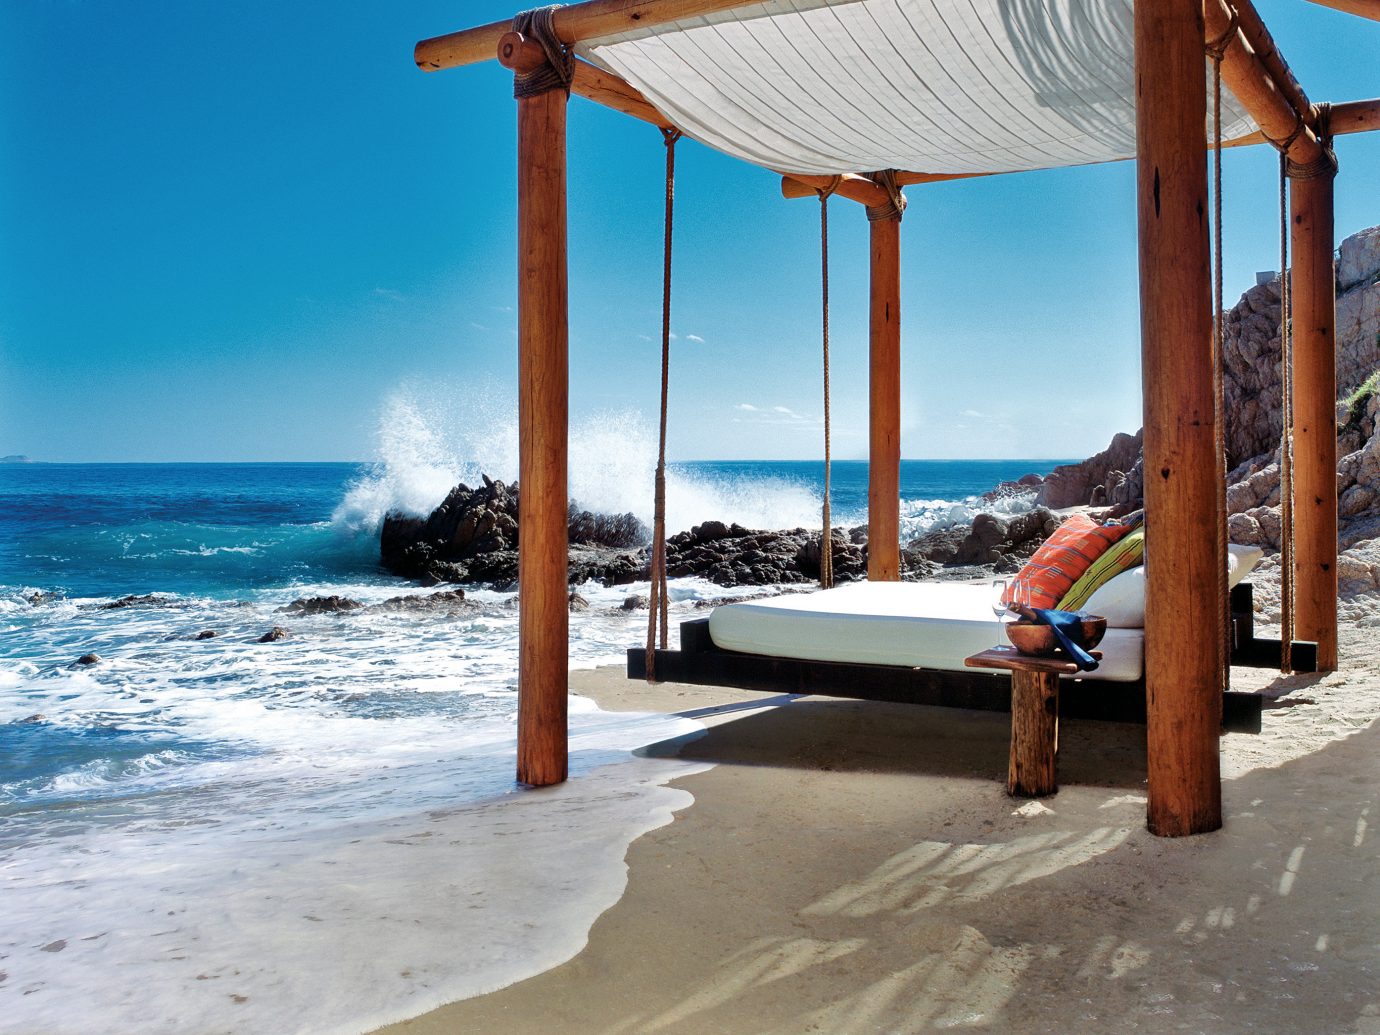 Beach Beachfront Celebs Hotels Play Resort Romance Romantic Trip Ideas sky outdoor leisure vacation Ocean Sea caribbean walkway swimming pool estate shore sandy several